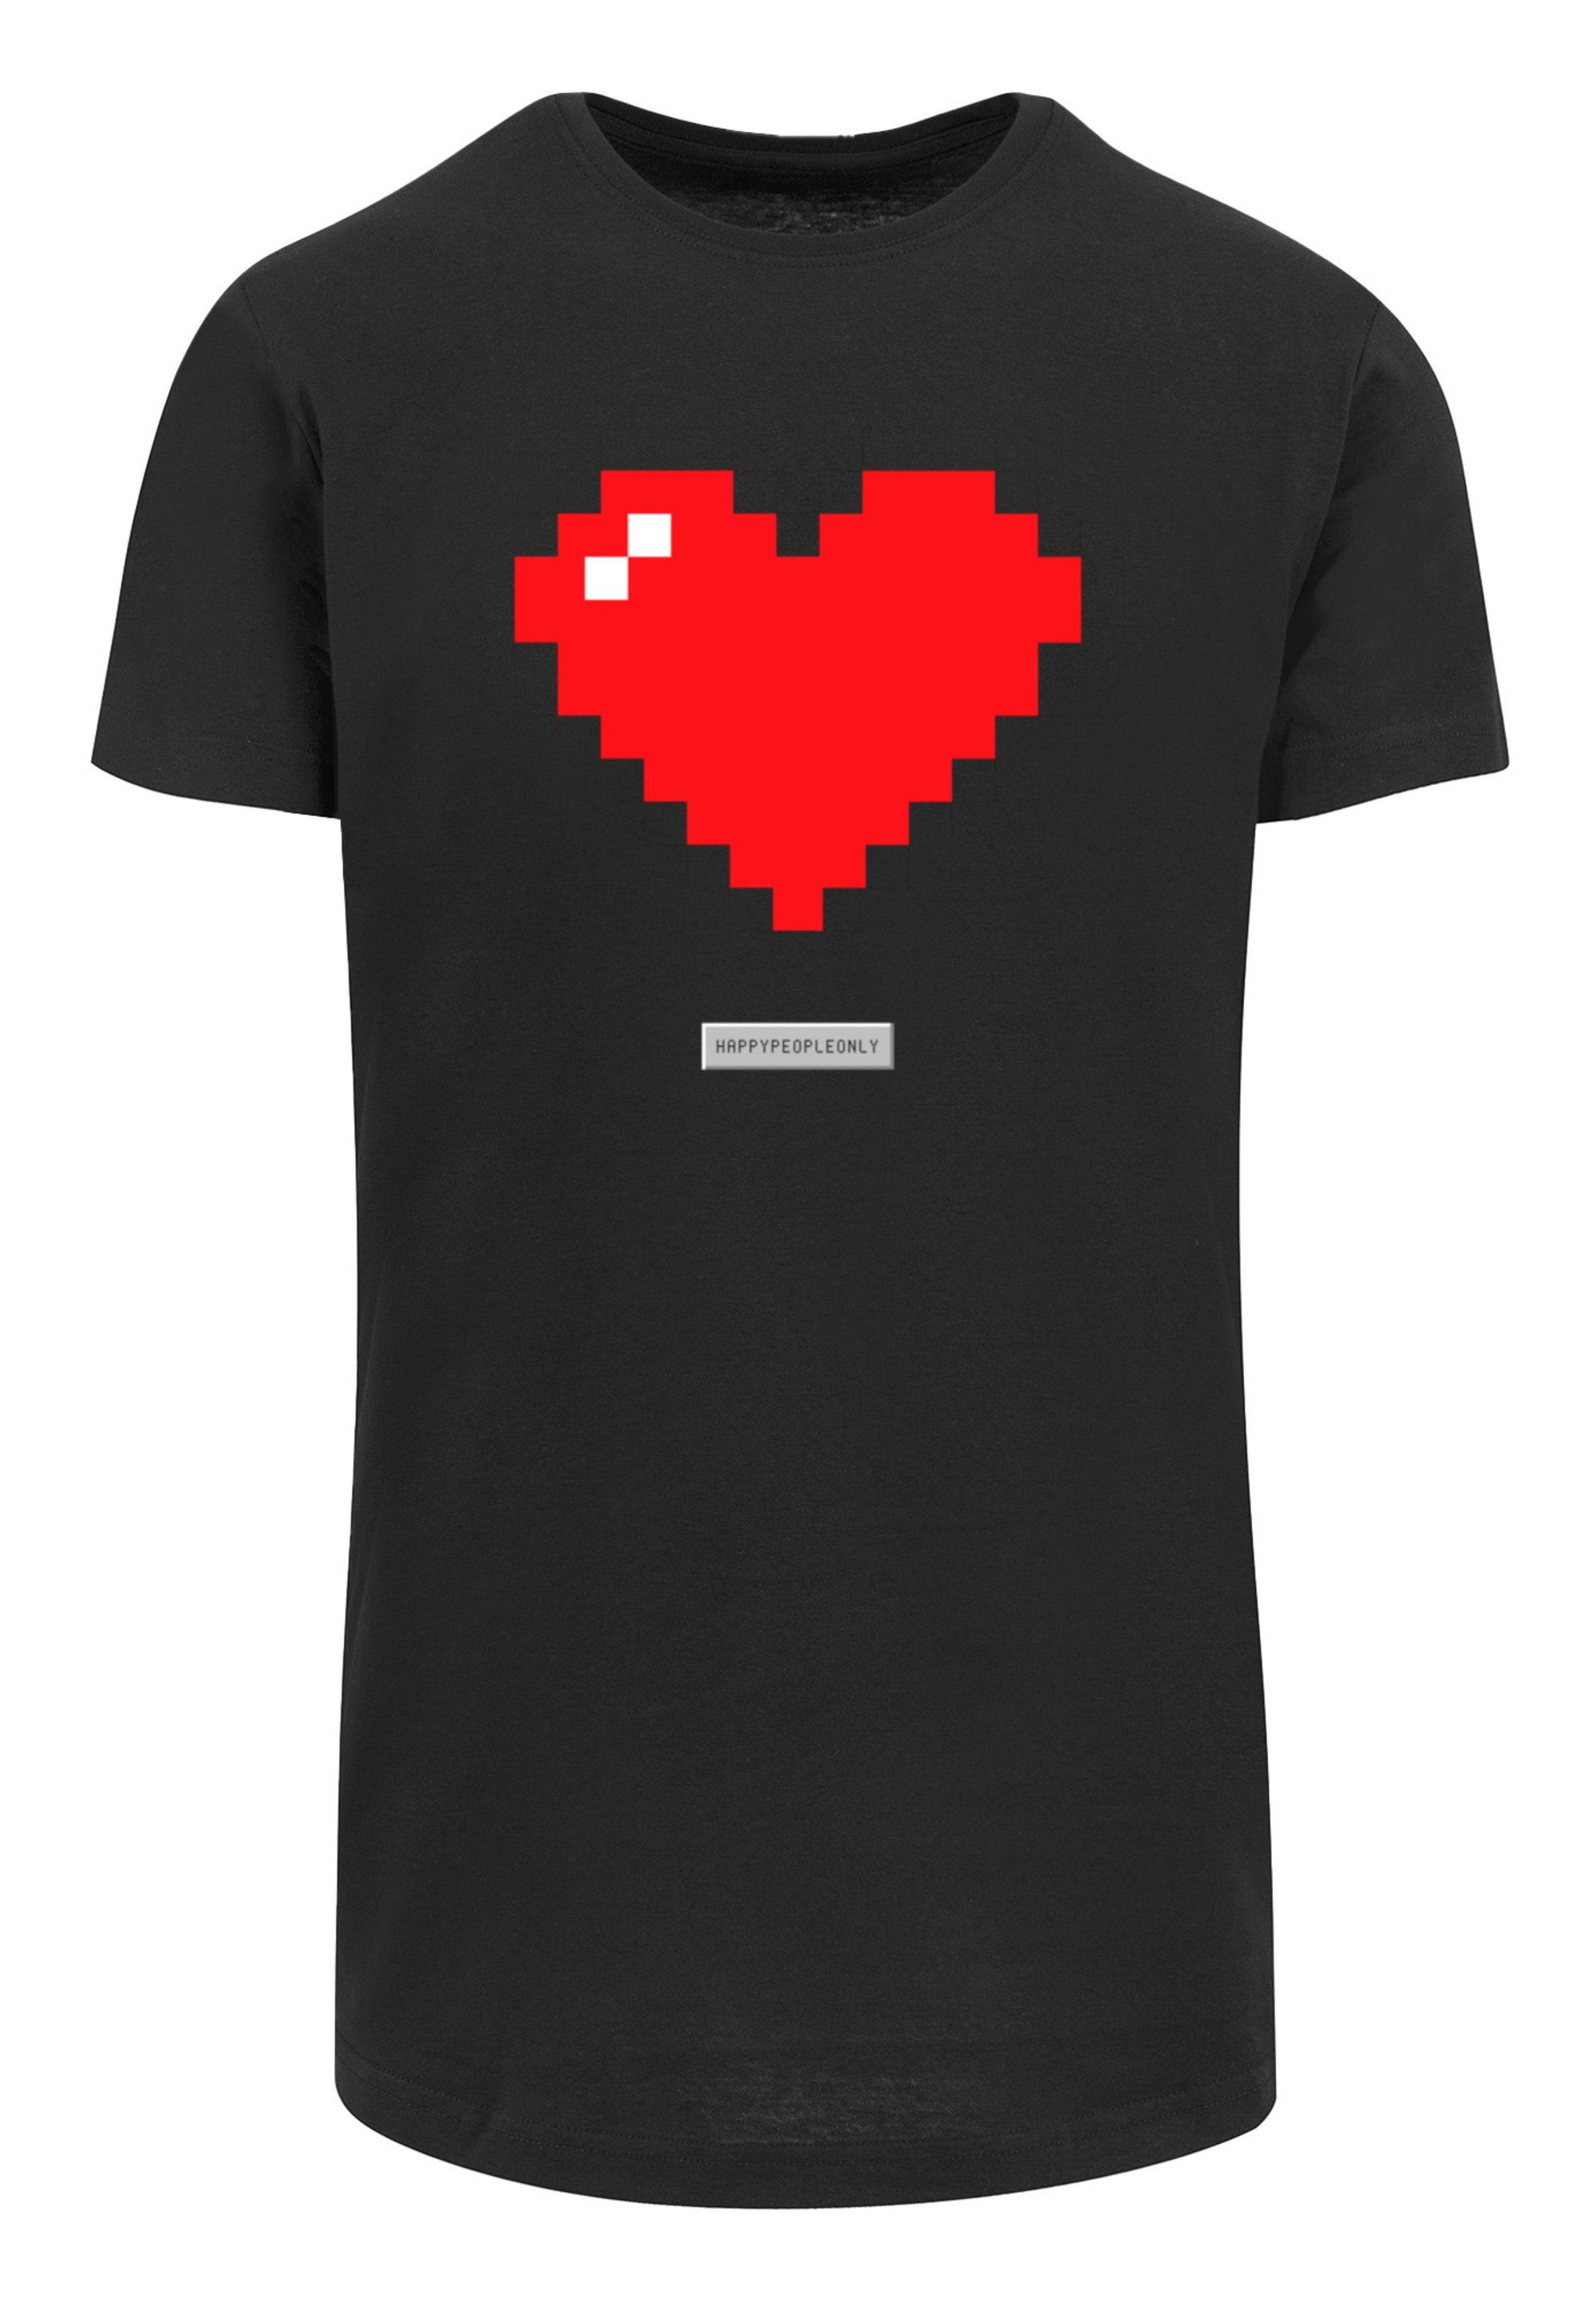 F4NT4STIC T-Shirt Pixel Herz Print People Happy schwarz Vibes Good